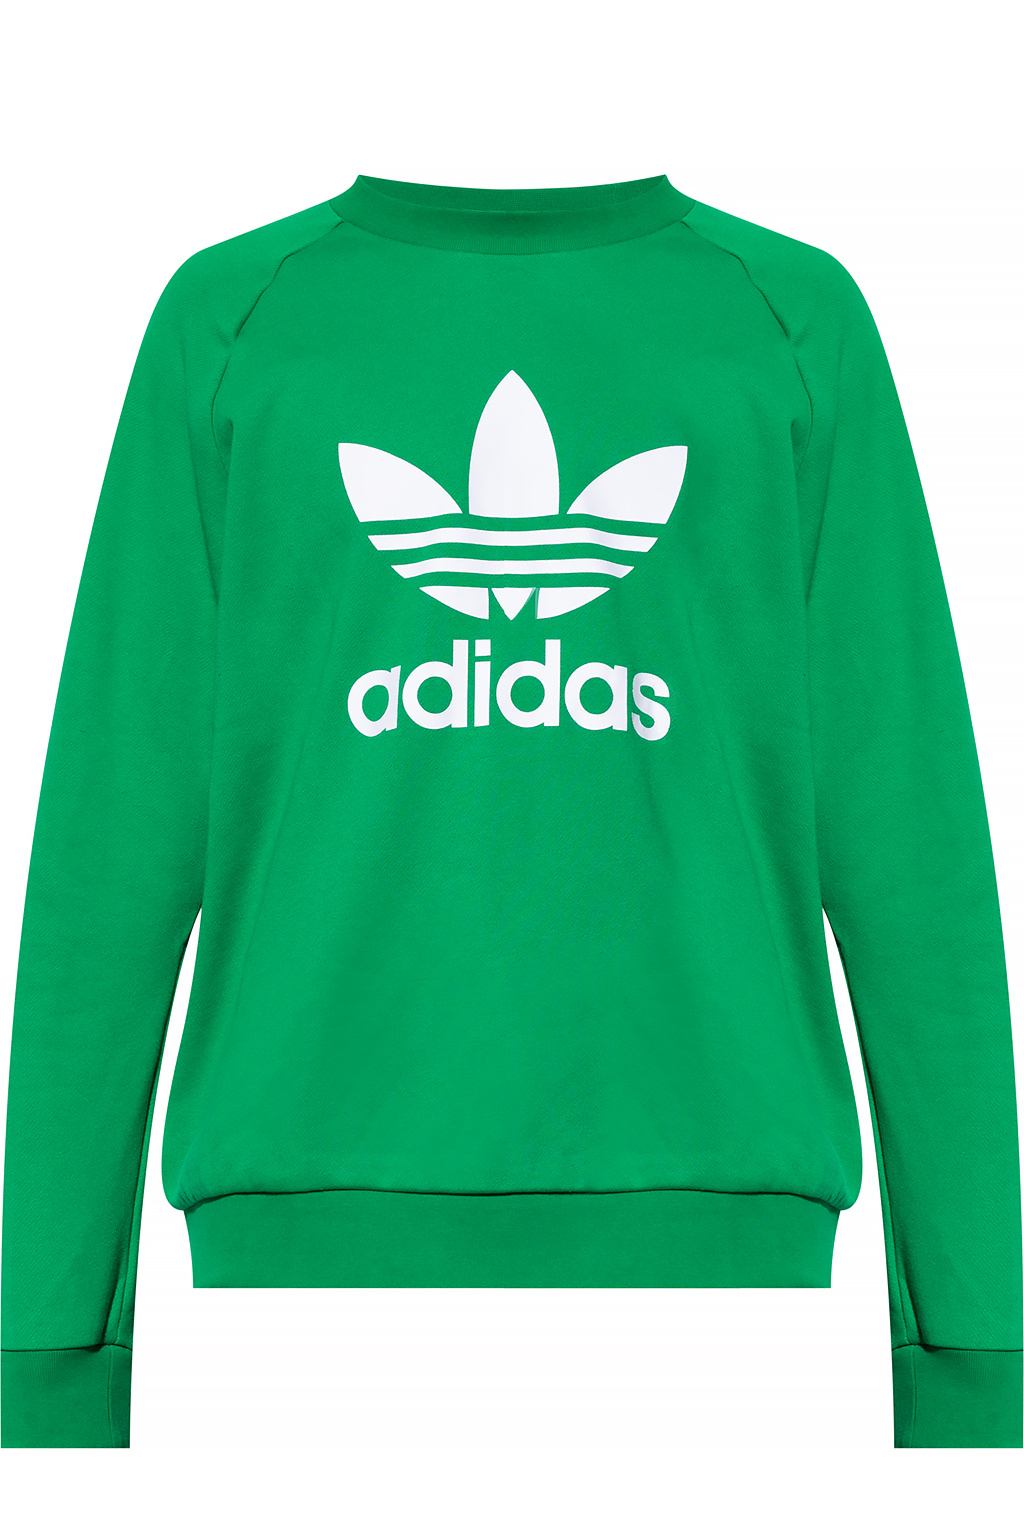 Ietp US - Sweatshirt with logo ADIDAS Originals - upcoming adidas ...